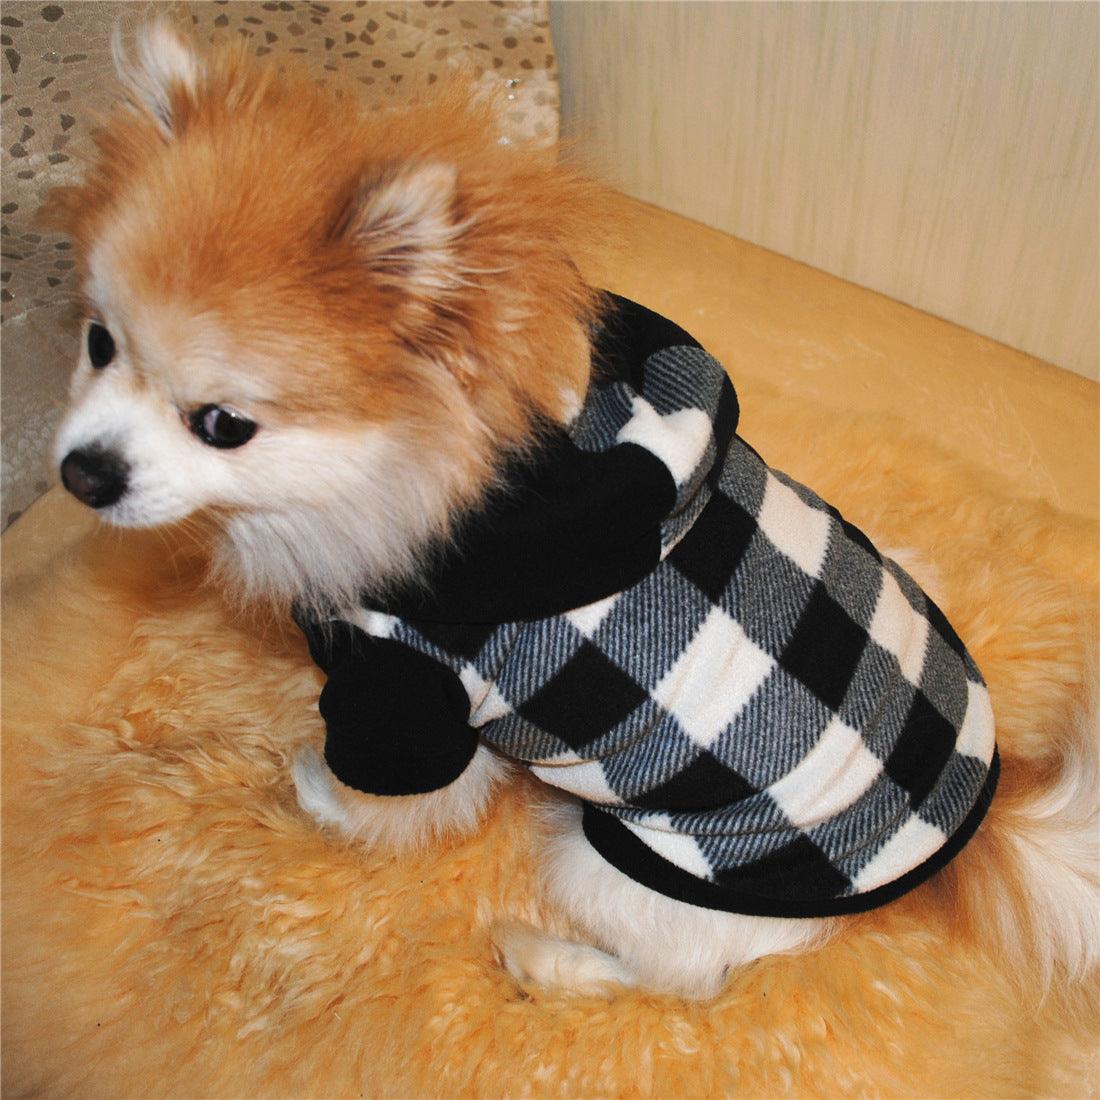 Pet Supplies Dog Winter Hooded Clothing Sweater - Dog Hugs Cat